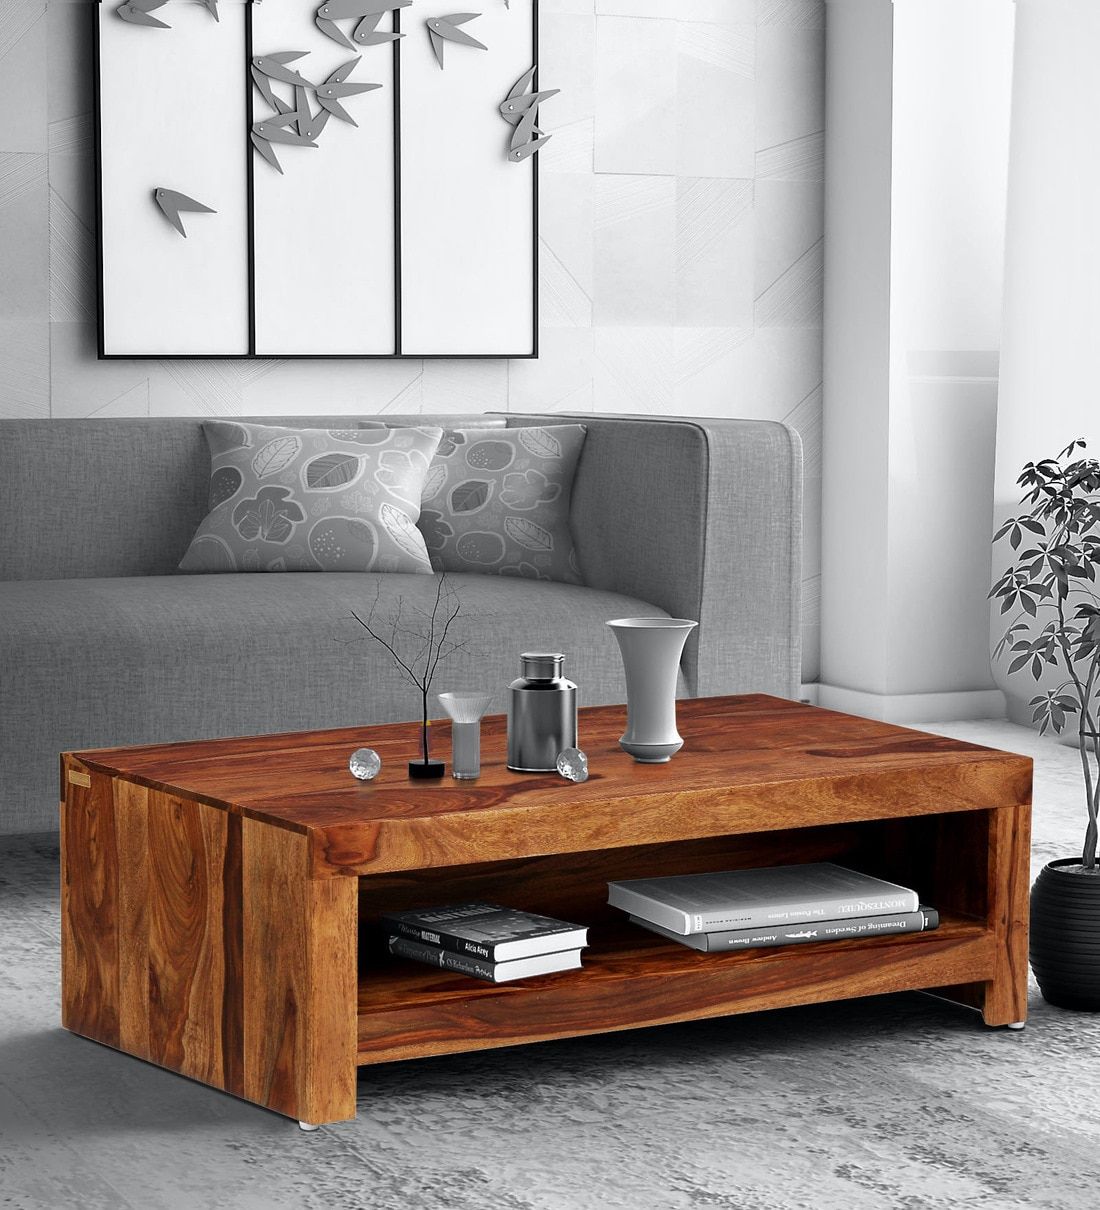 Buy Acropolis Solid Wood Coffee Table In Rustic Teak Finish Regarding Modern Wooden X Design Coffee Tables (View 6 of 20)